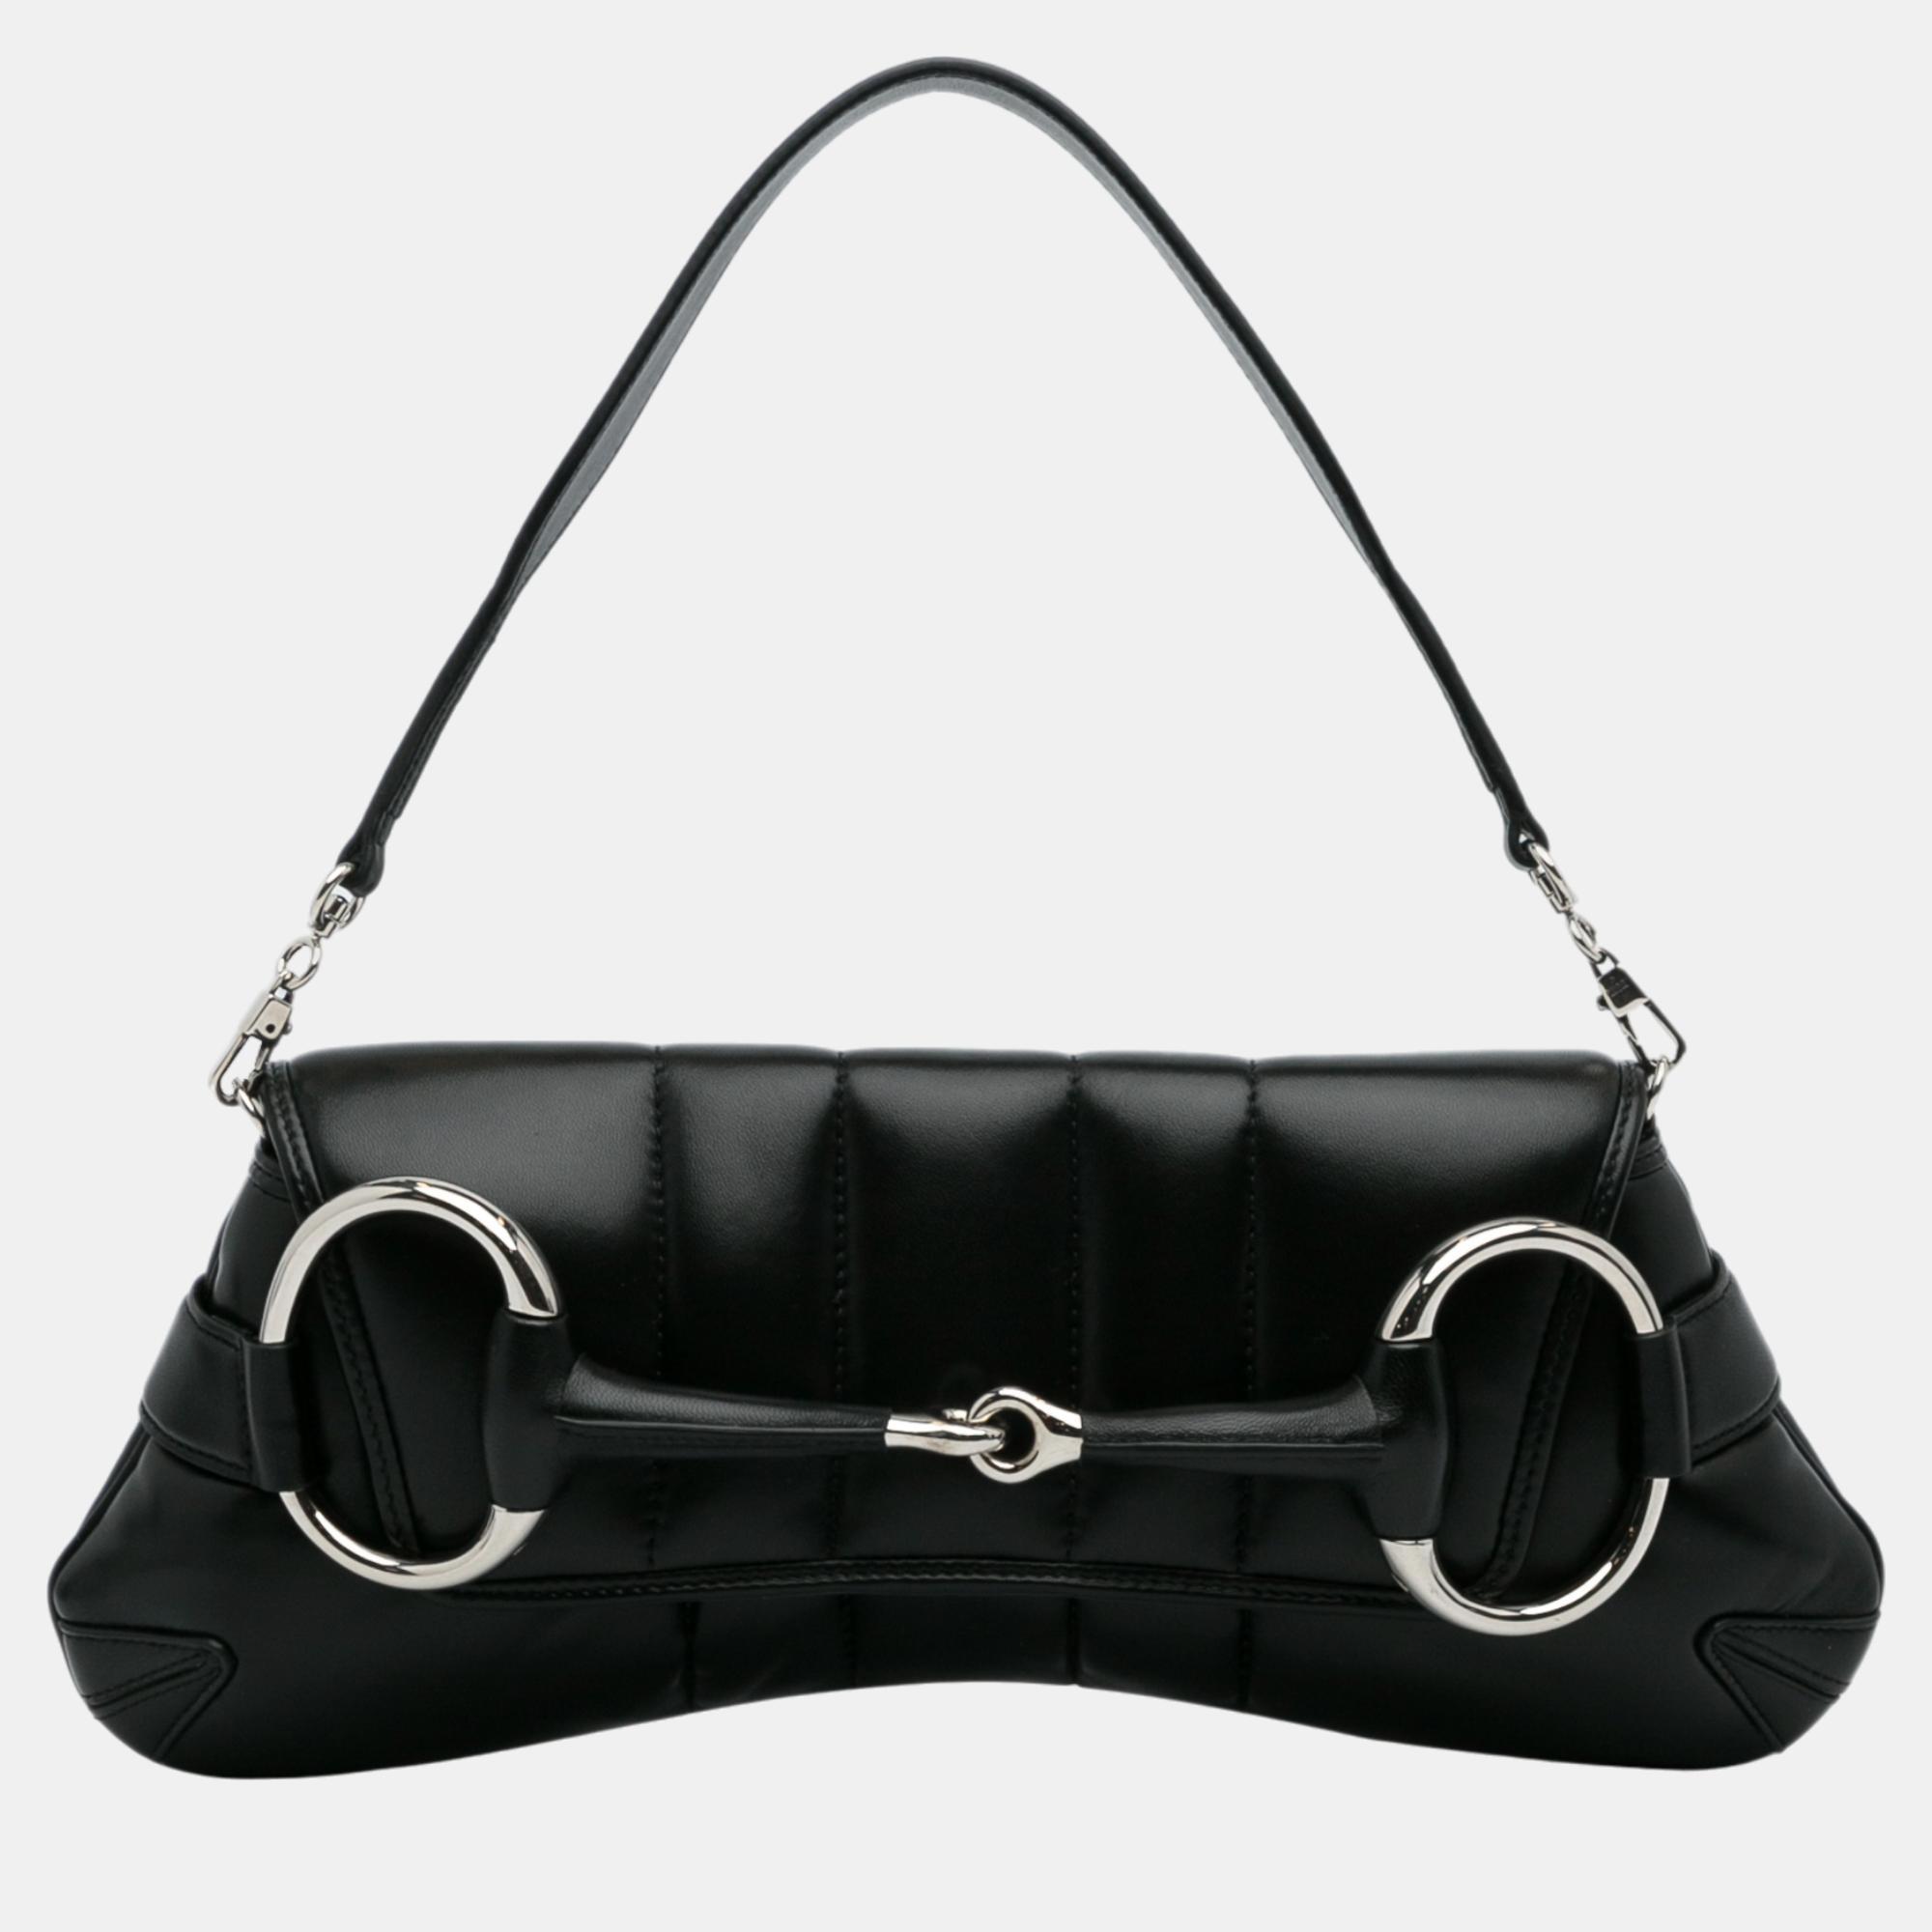 Gucci black leather horsebit chain satchel